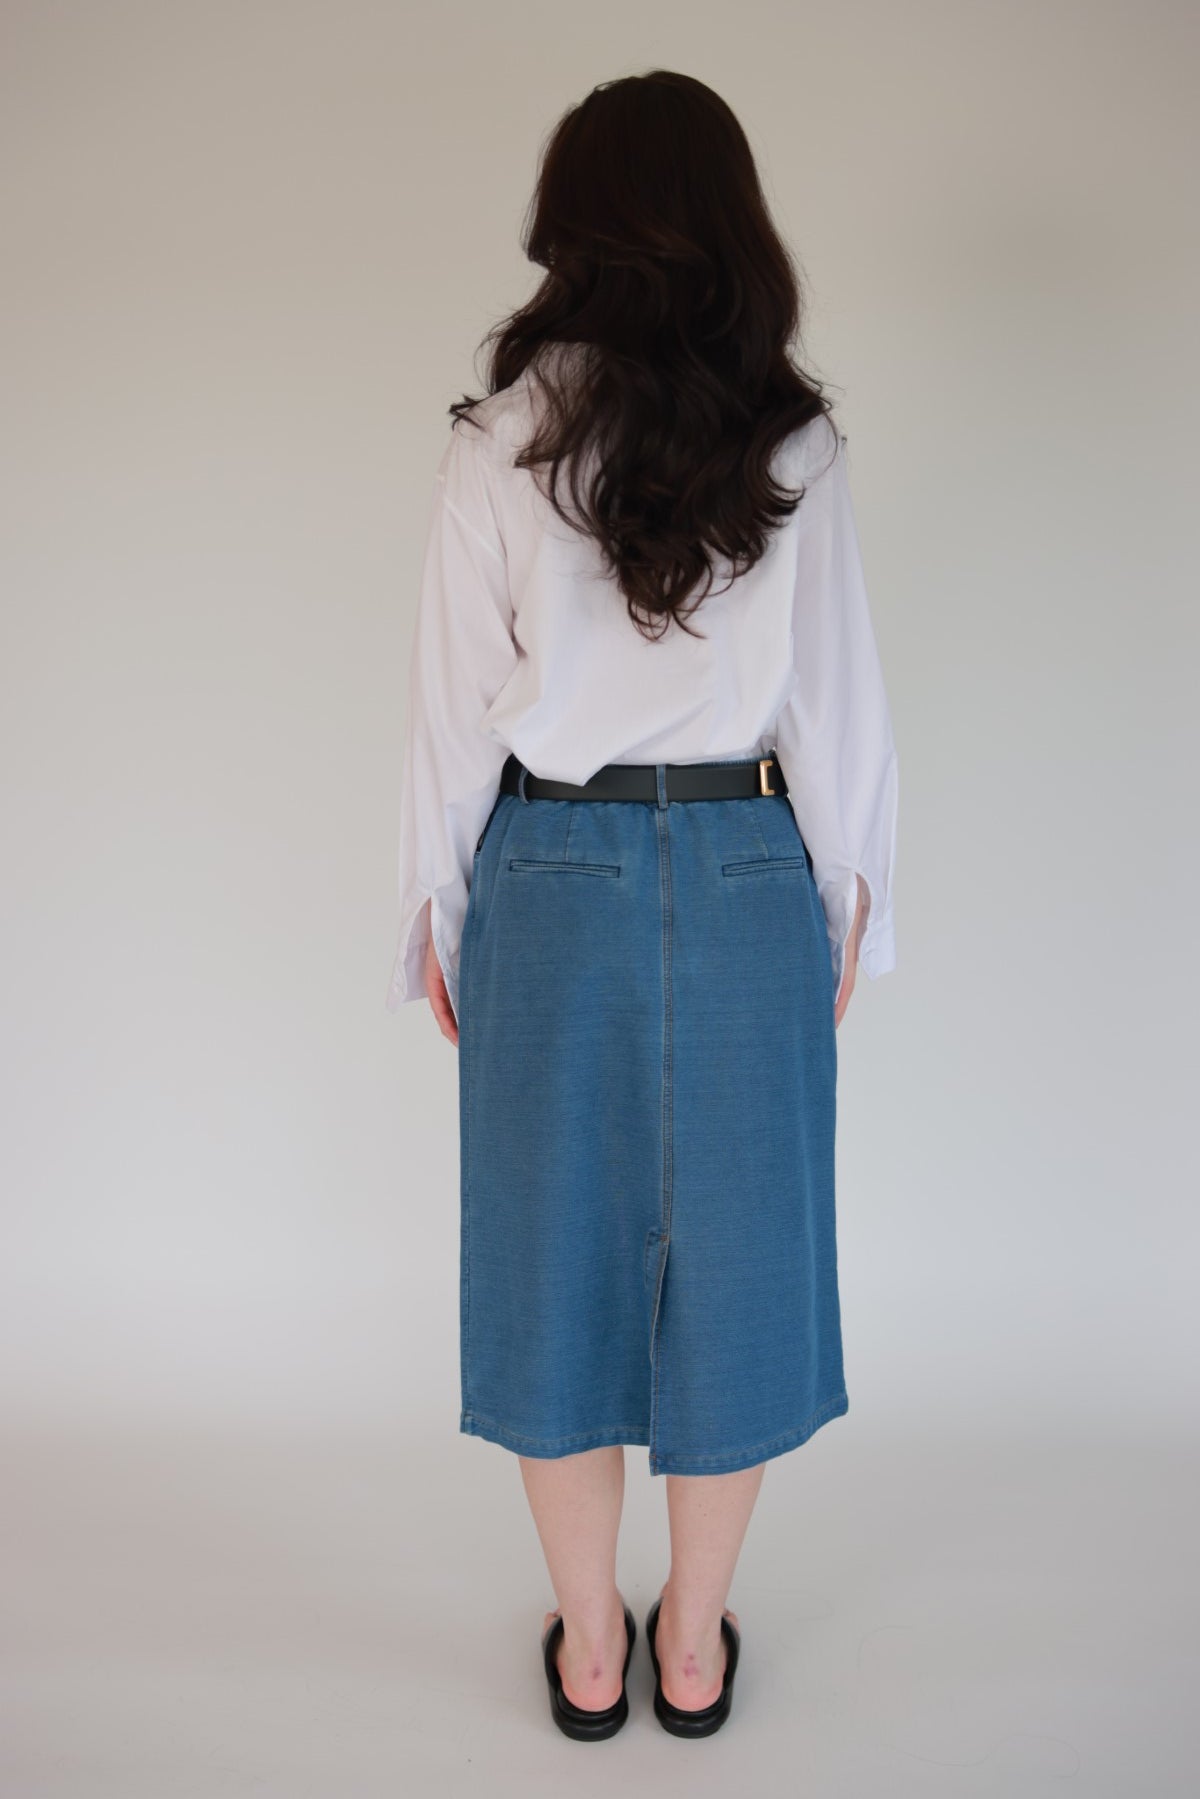 Jeans maxi skirt